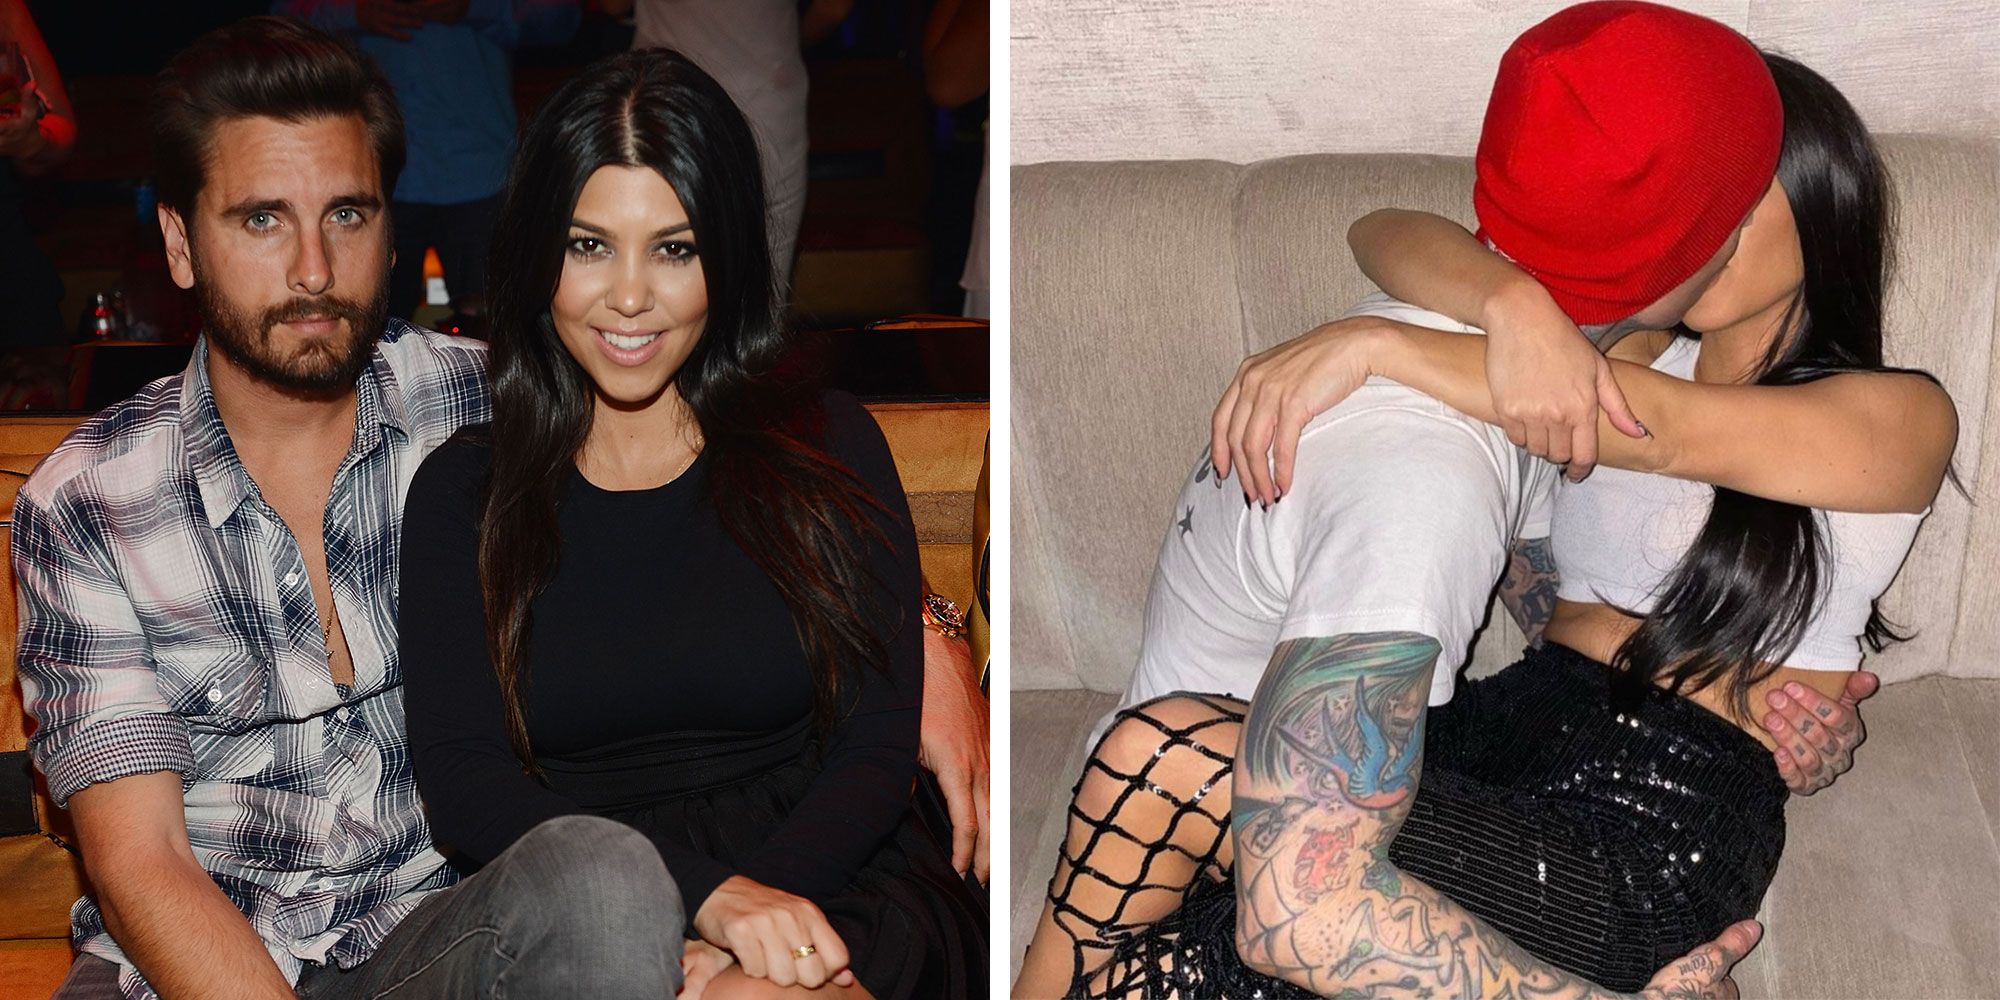 Kourtney Kardashian and Scott Disick deny relationship troubles